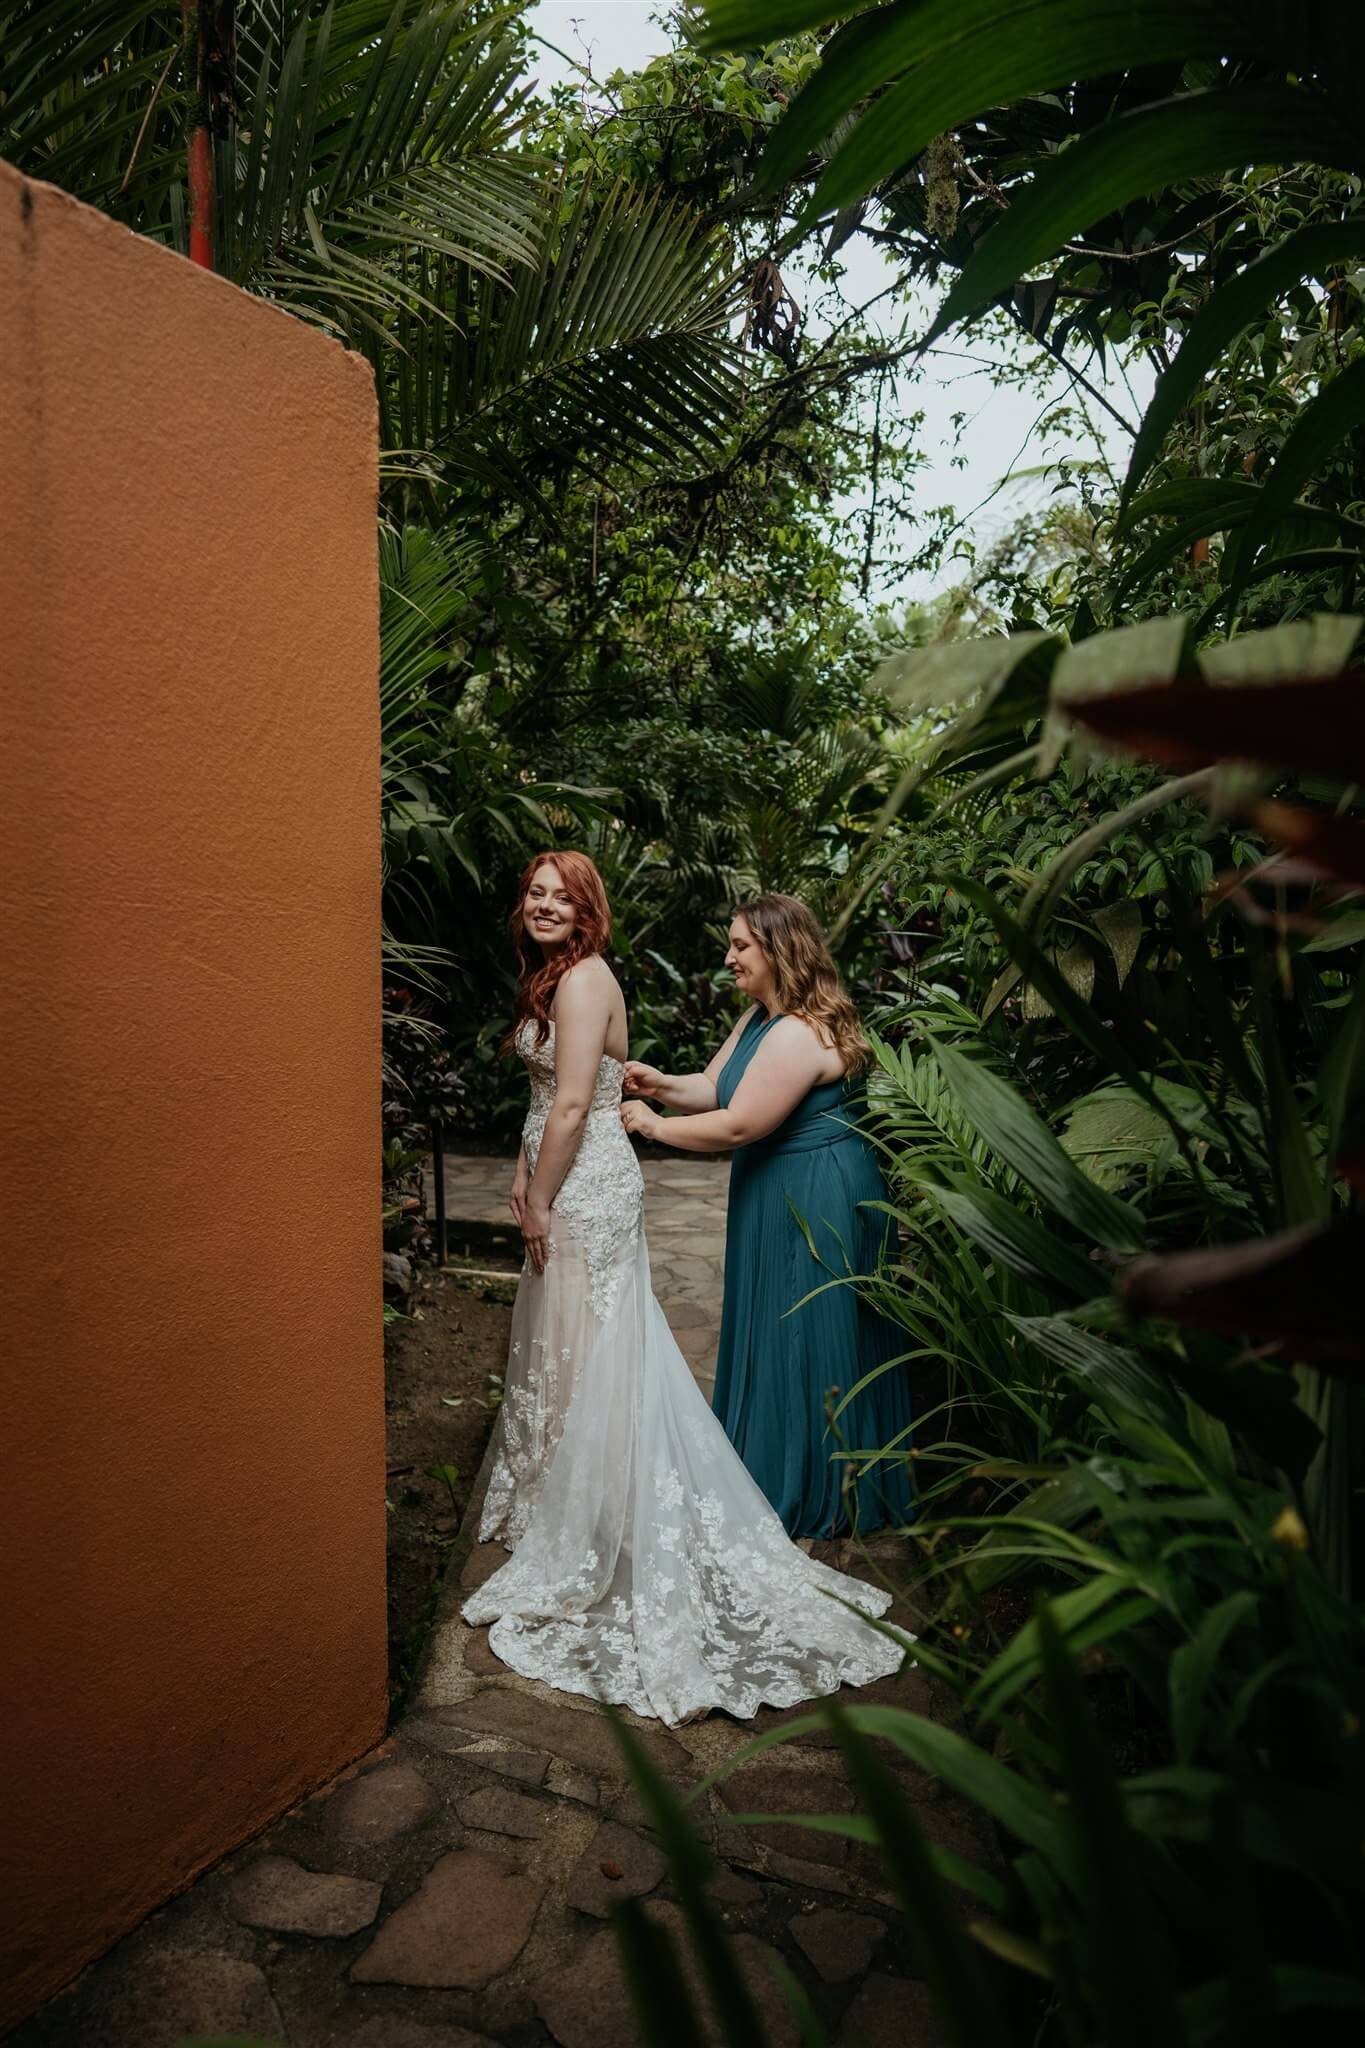 Bride getting into wedding dress for adventure elopement in Costa Rica